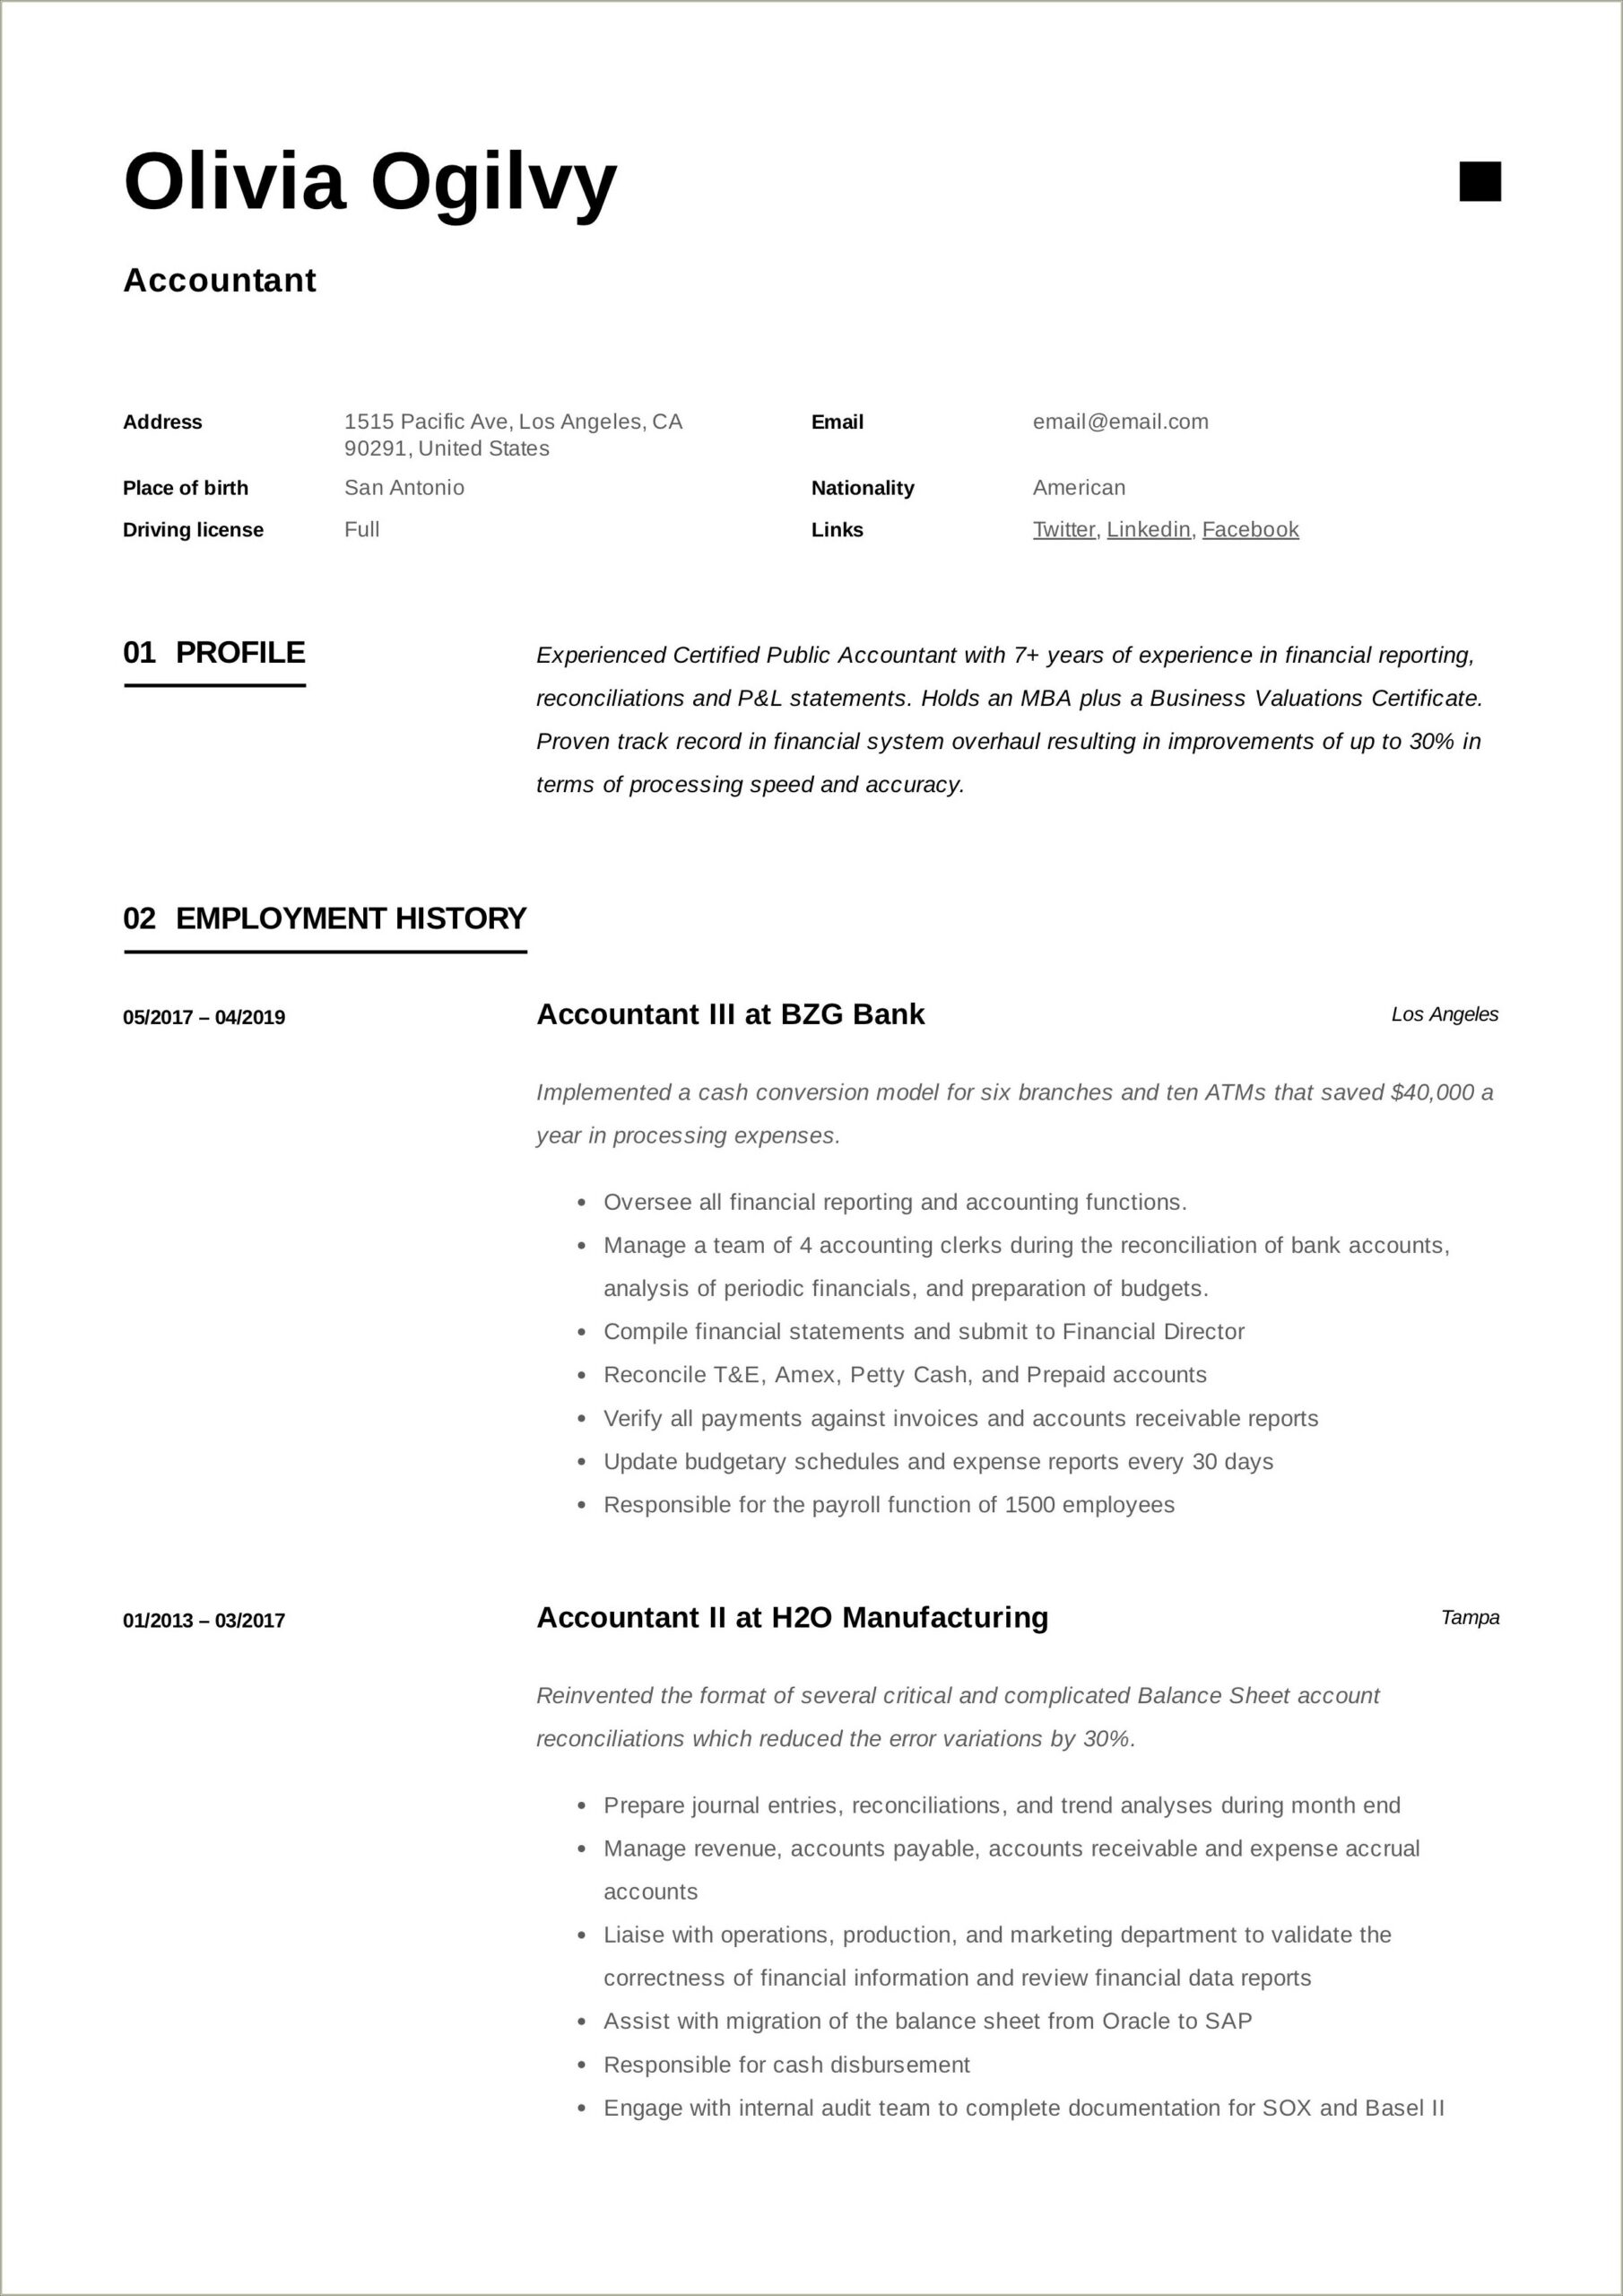 Job Responsibilities Of Accountant In Resume